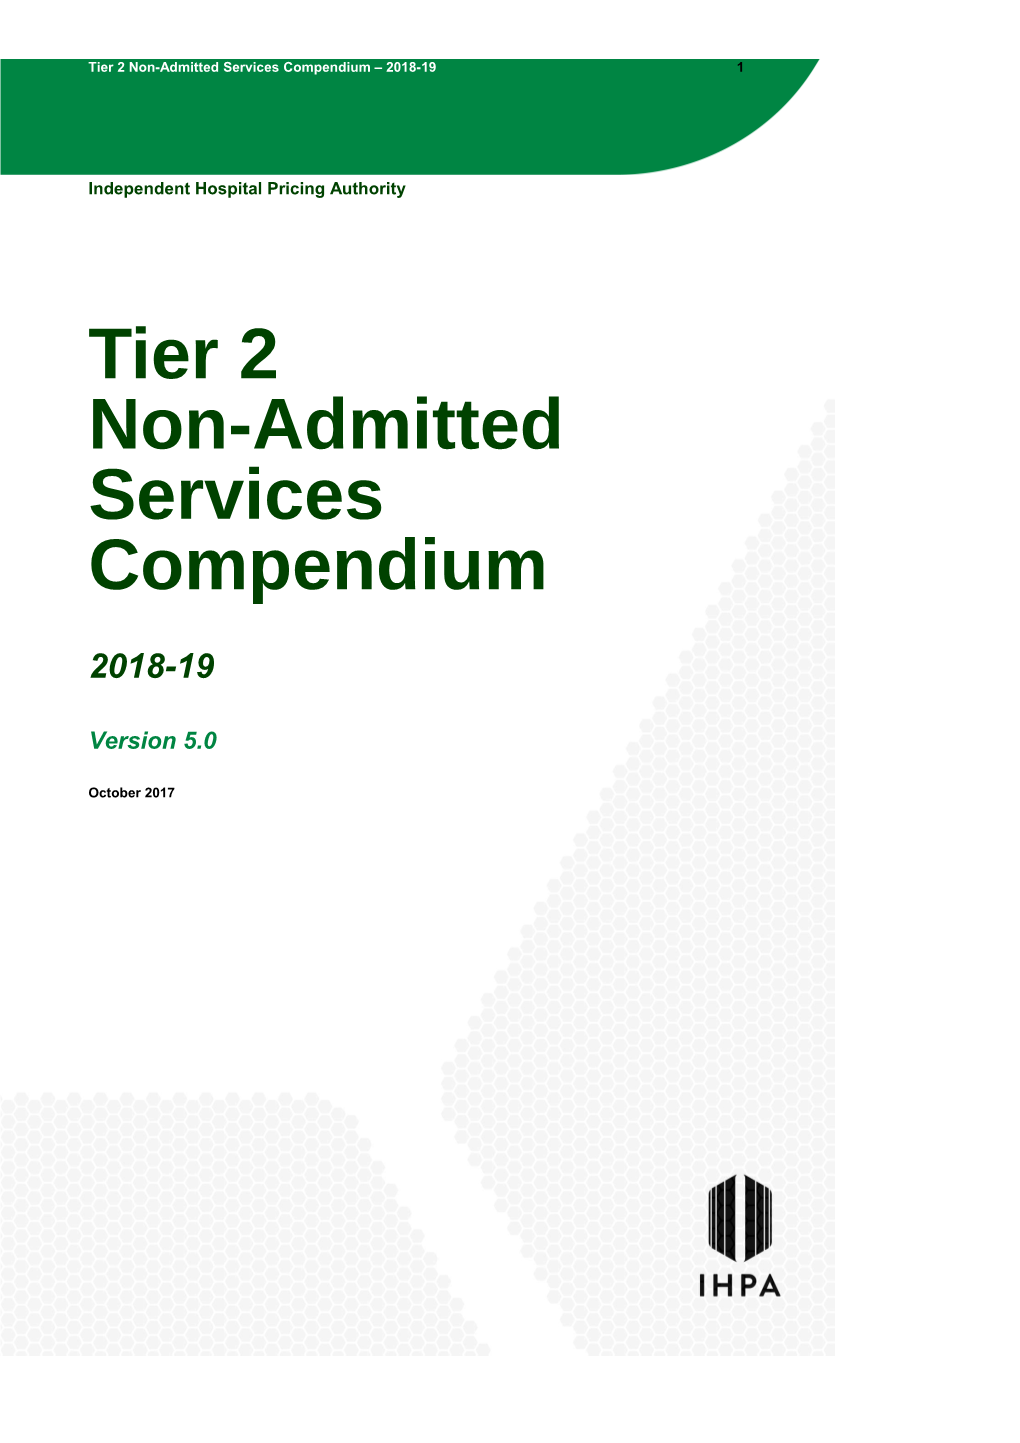 Tier 2 Non-Admitted Services Compendium 2018-19